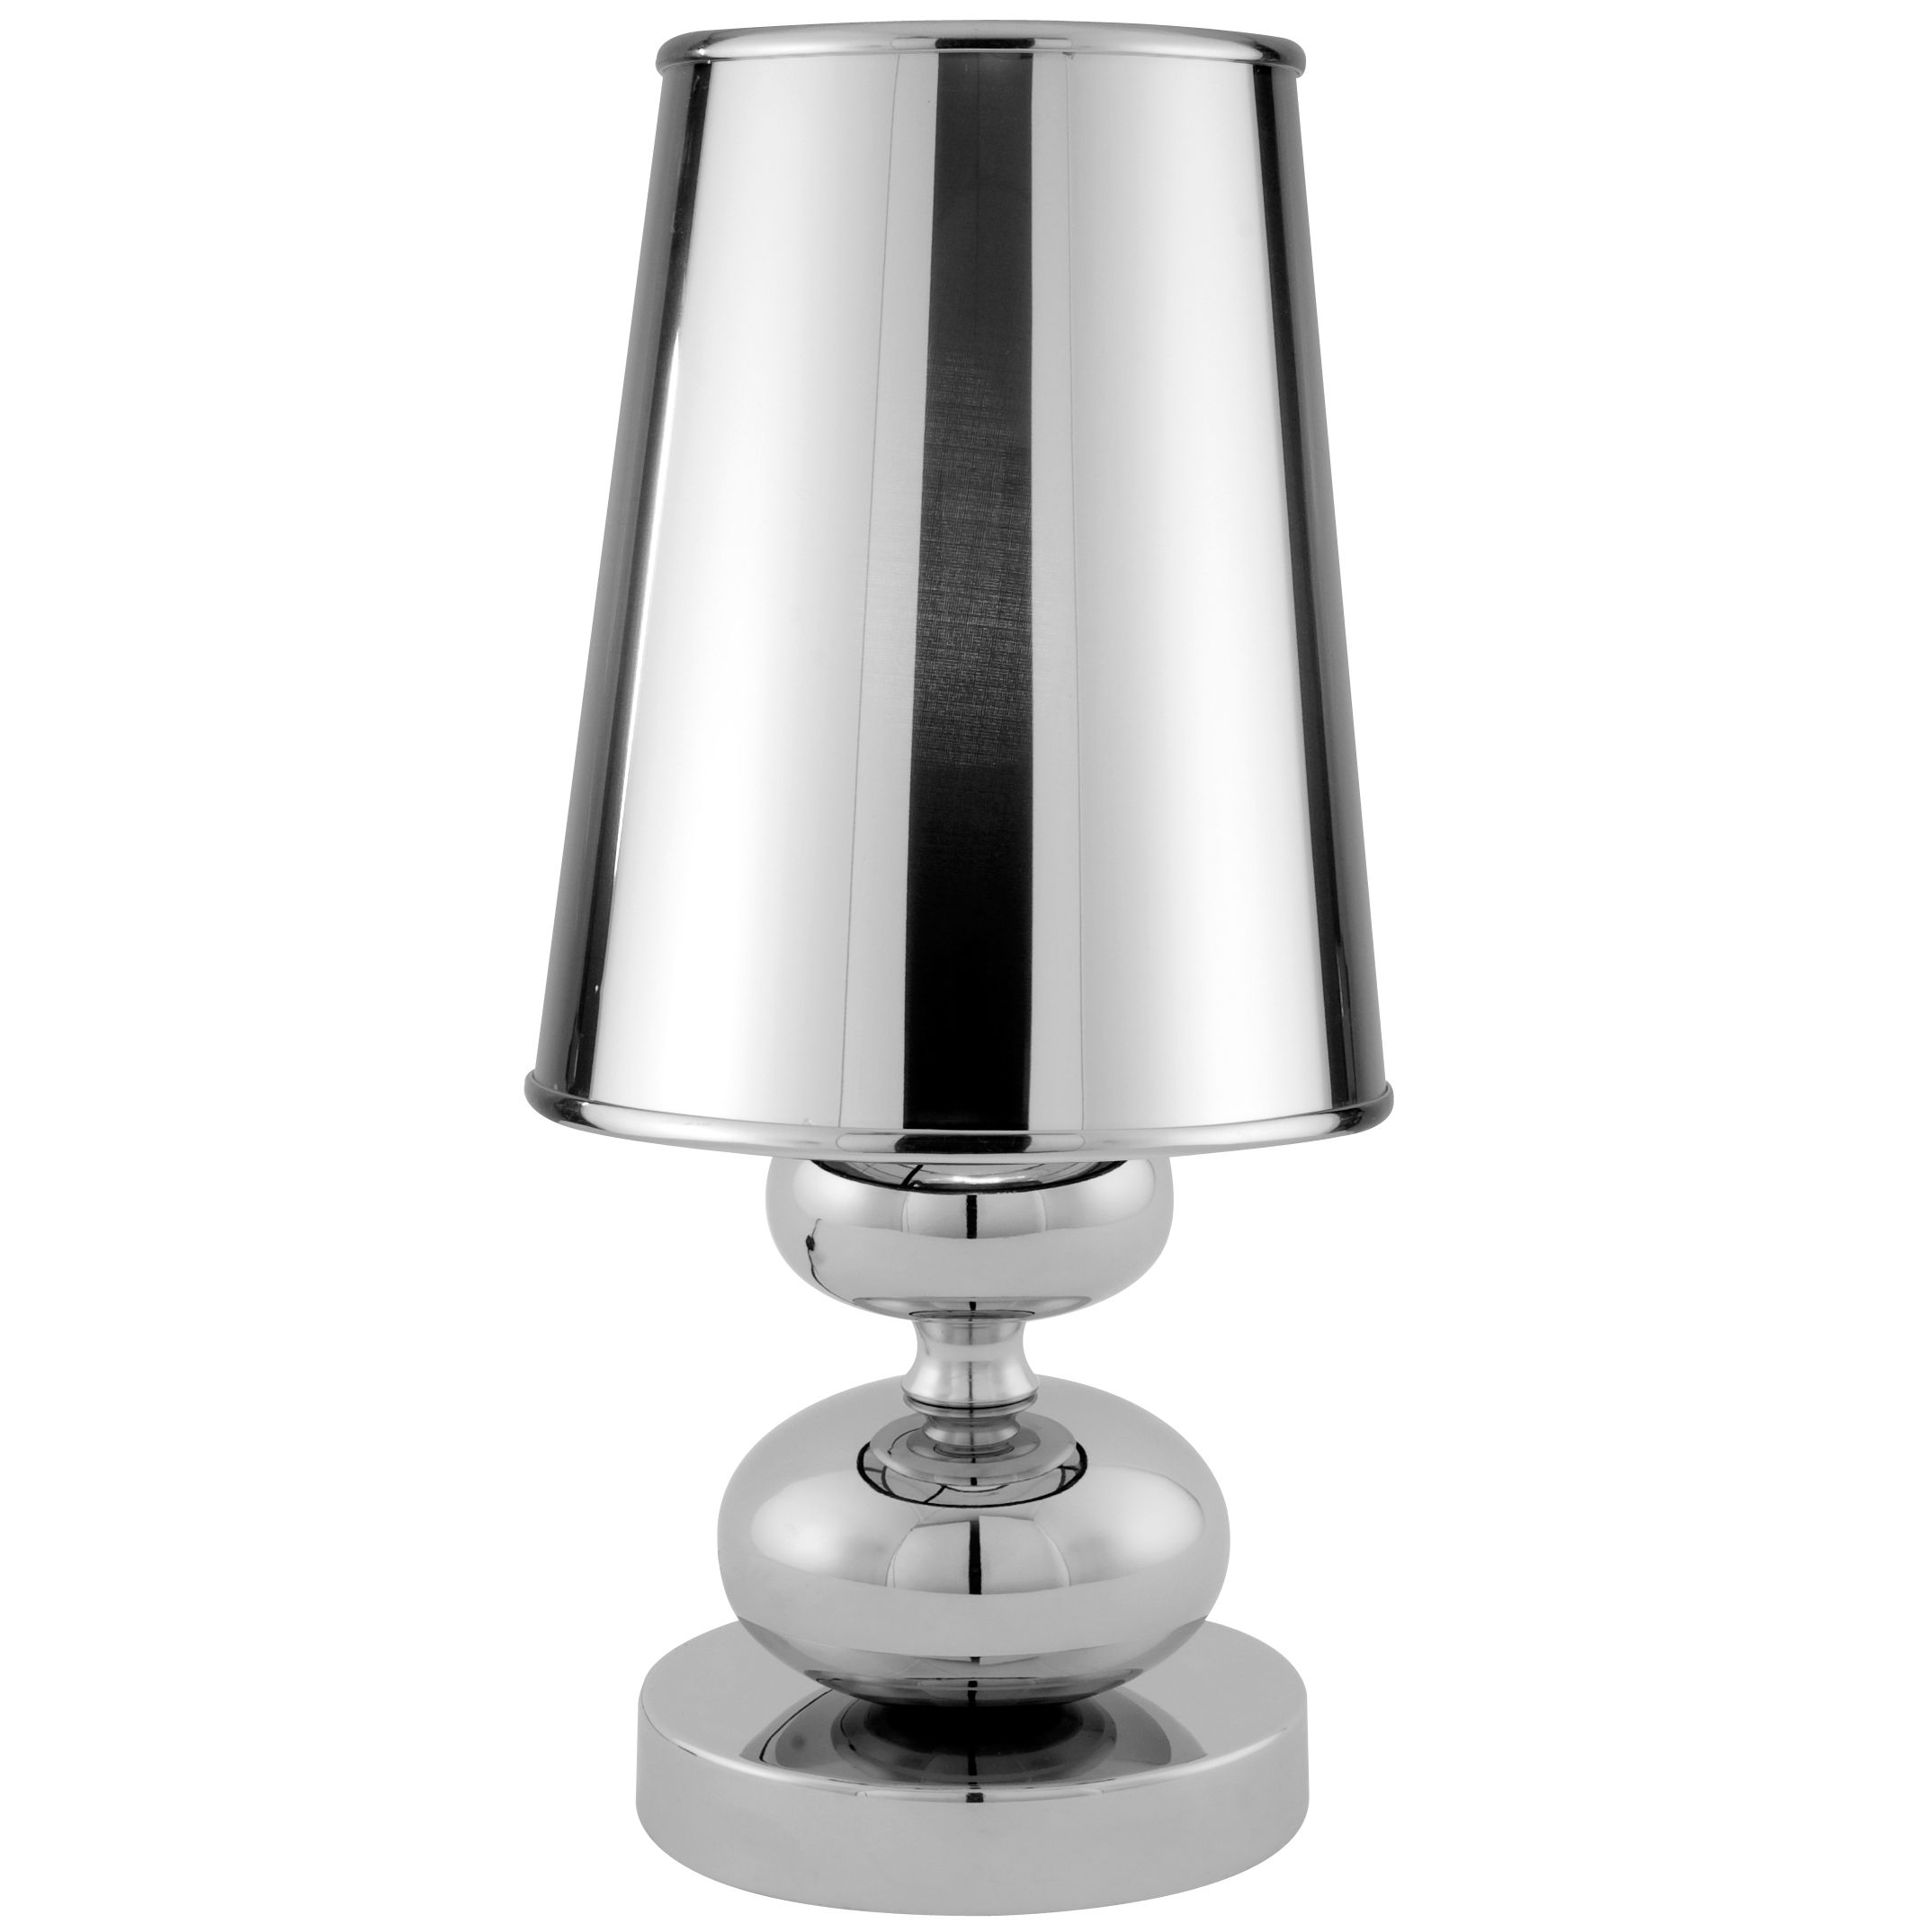 John Lewis Maisy Table Lamp, Silver